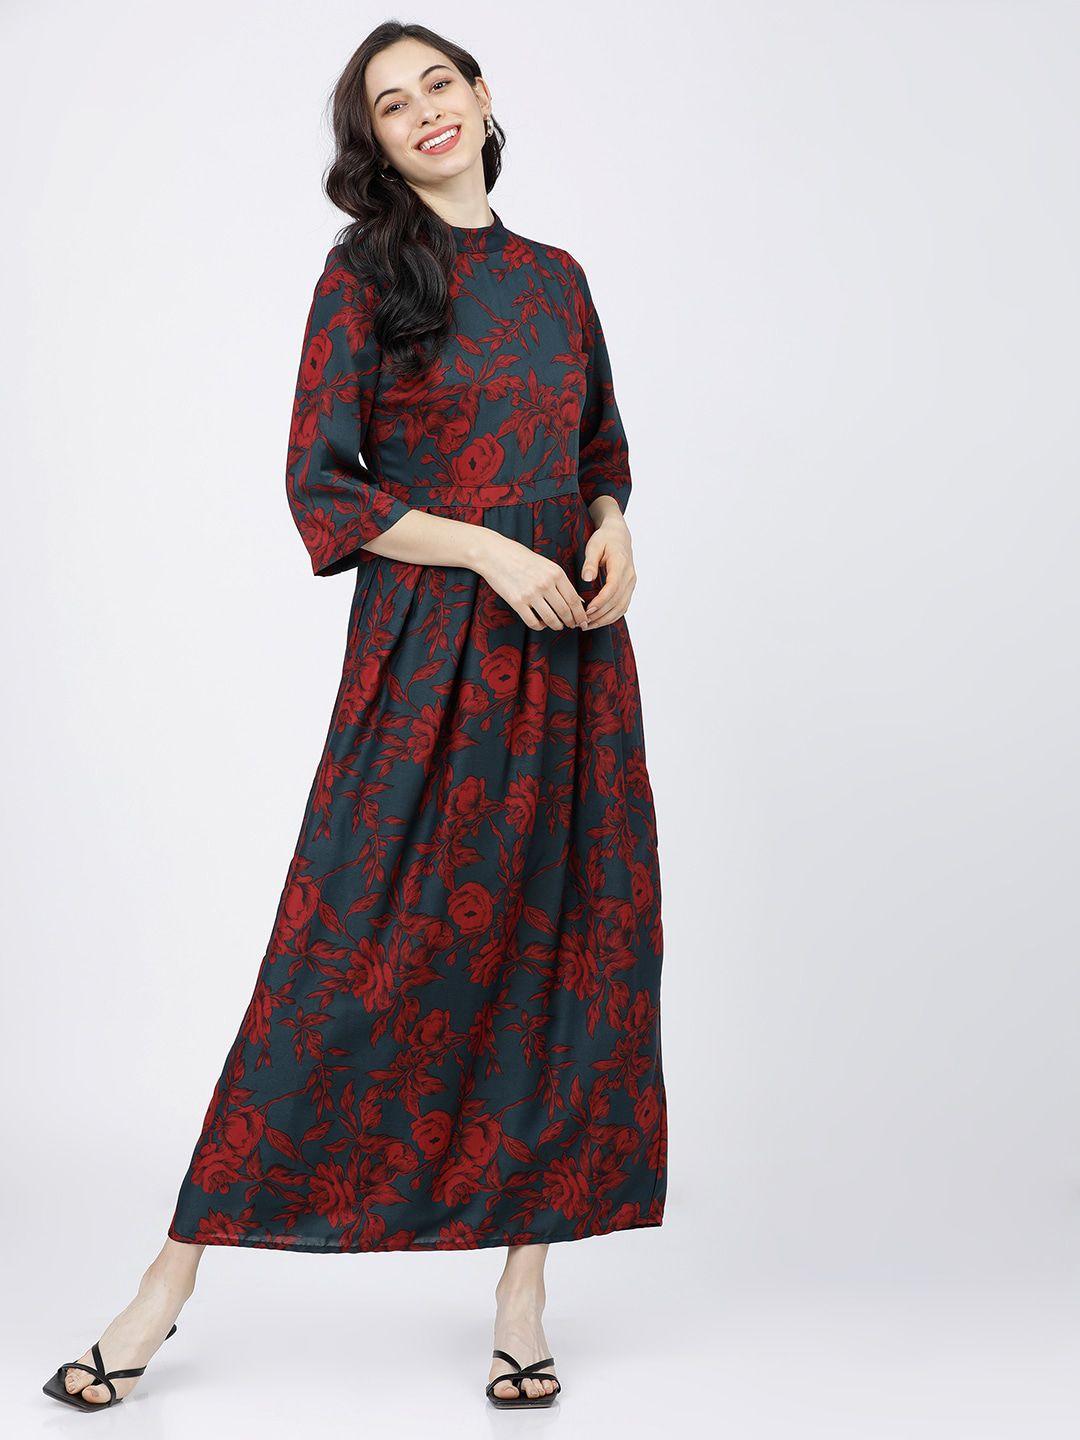 tokyo talkies teal floral maxi dress